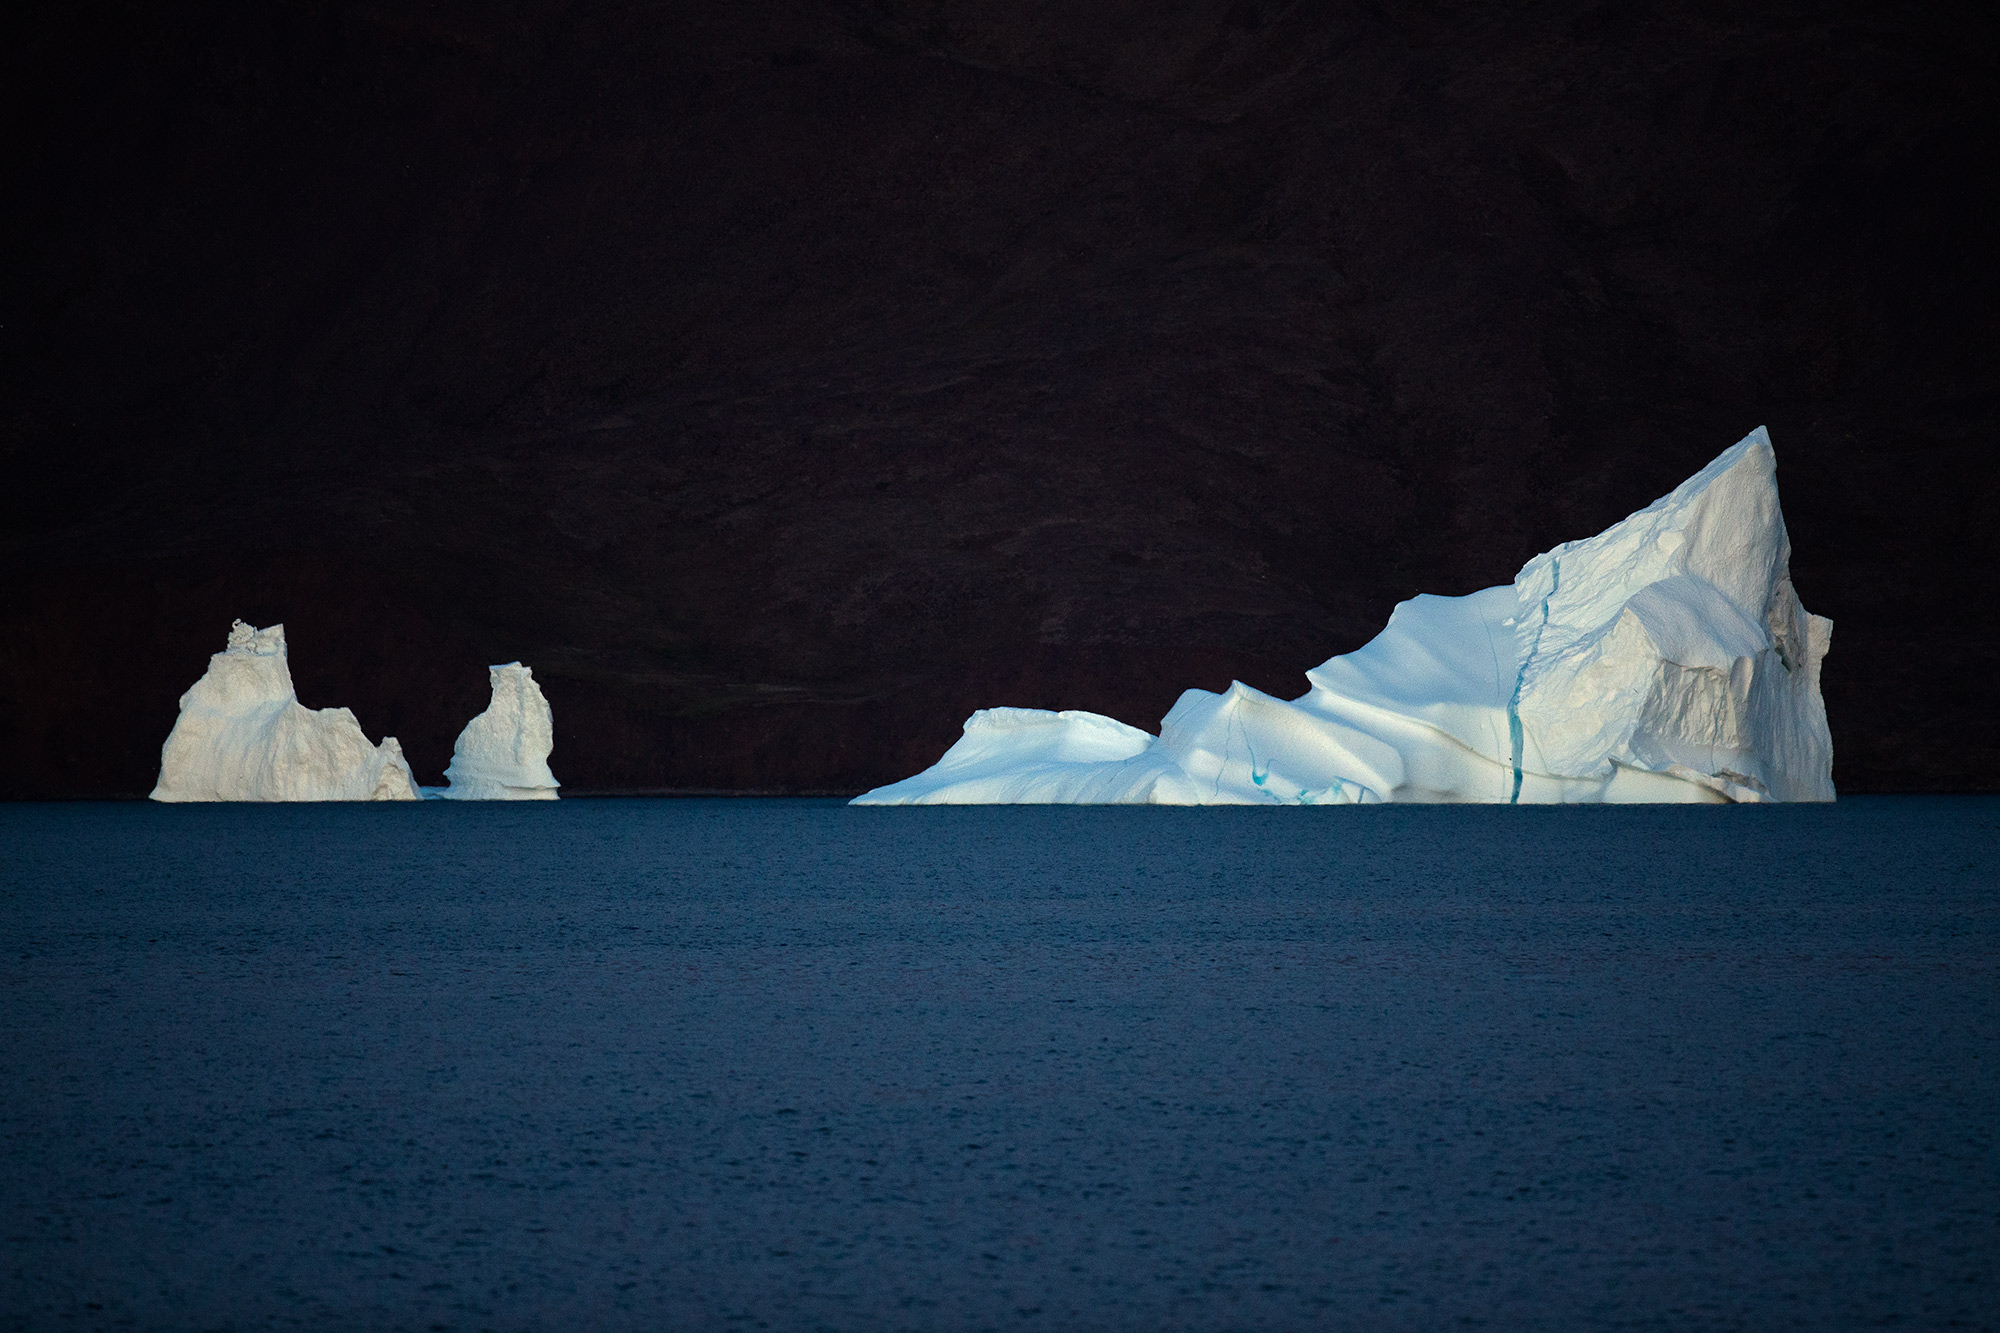 Iceberg lit by moonlight